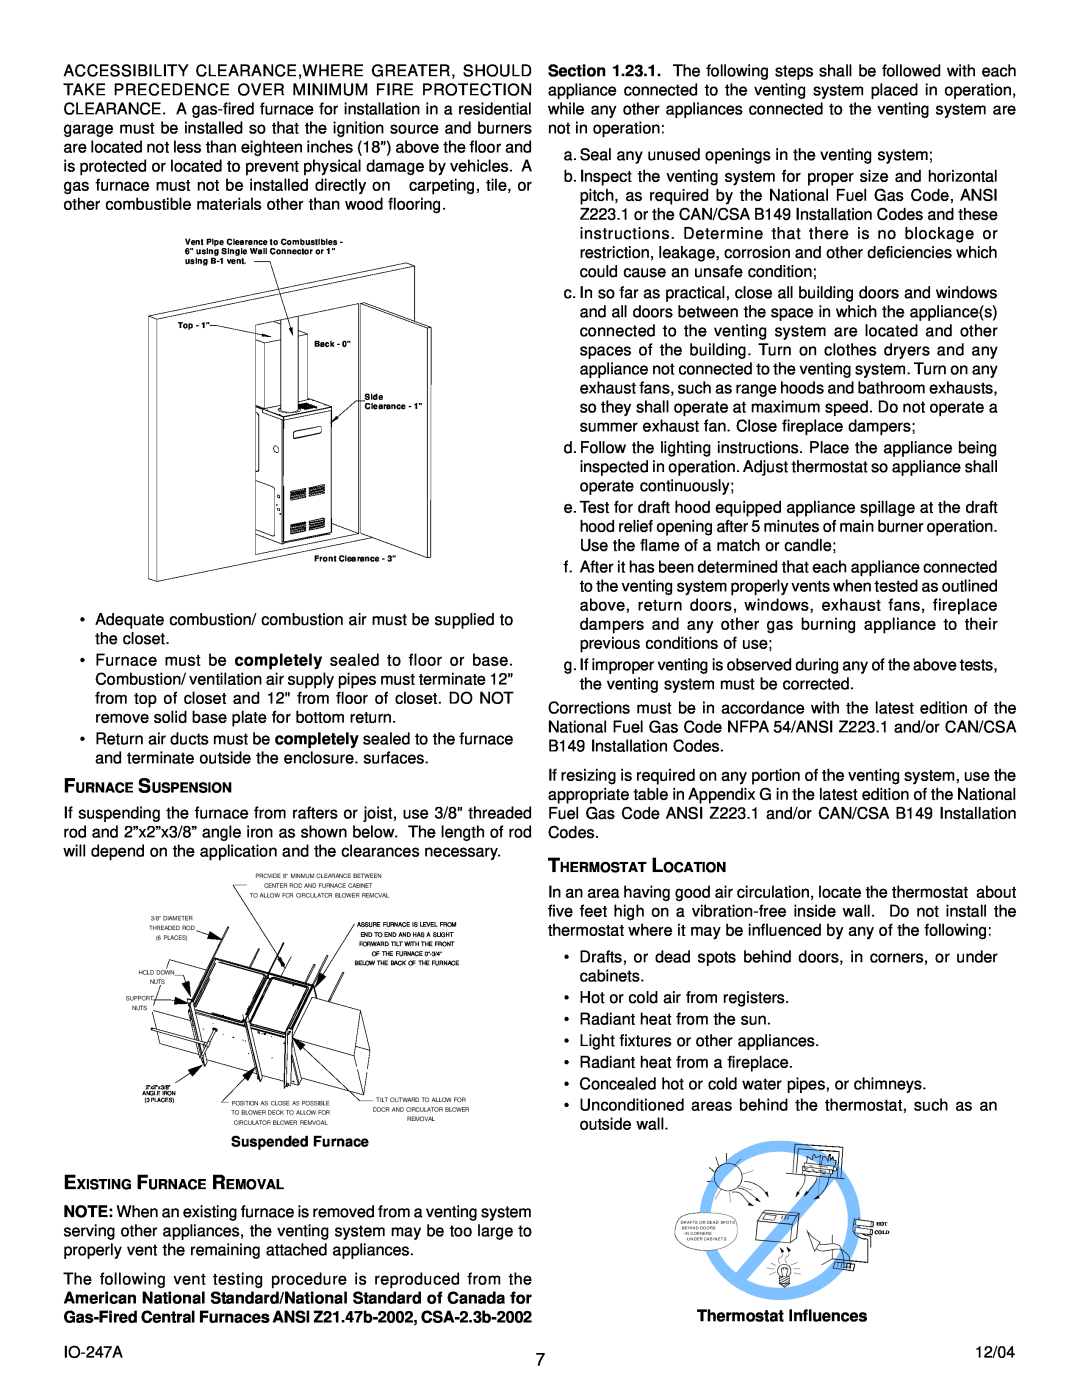 Goodman Mfg AMV8 instruction manual Thermostat Influences, Suspended Furnace 